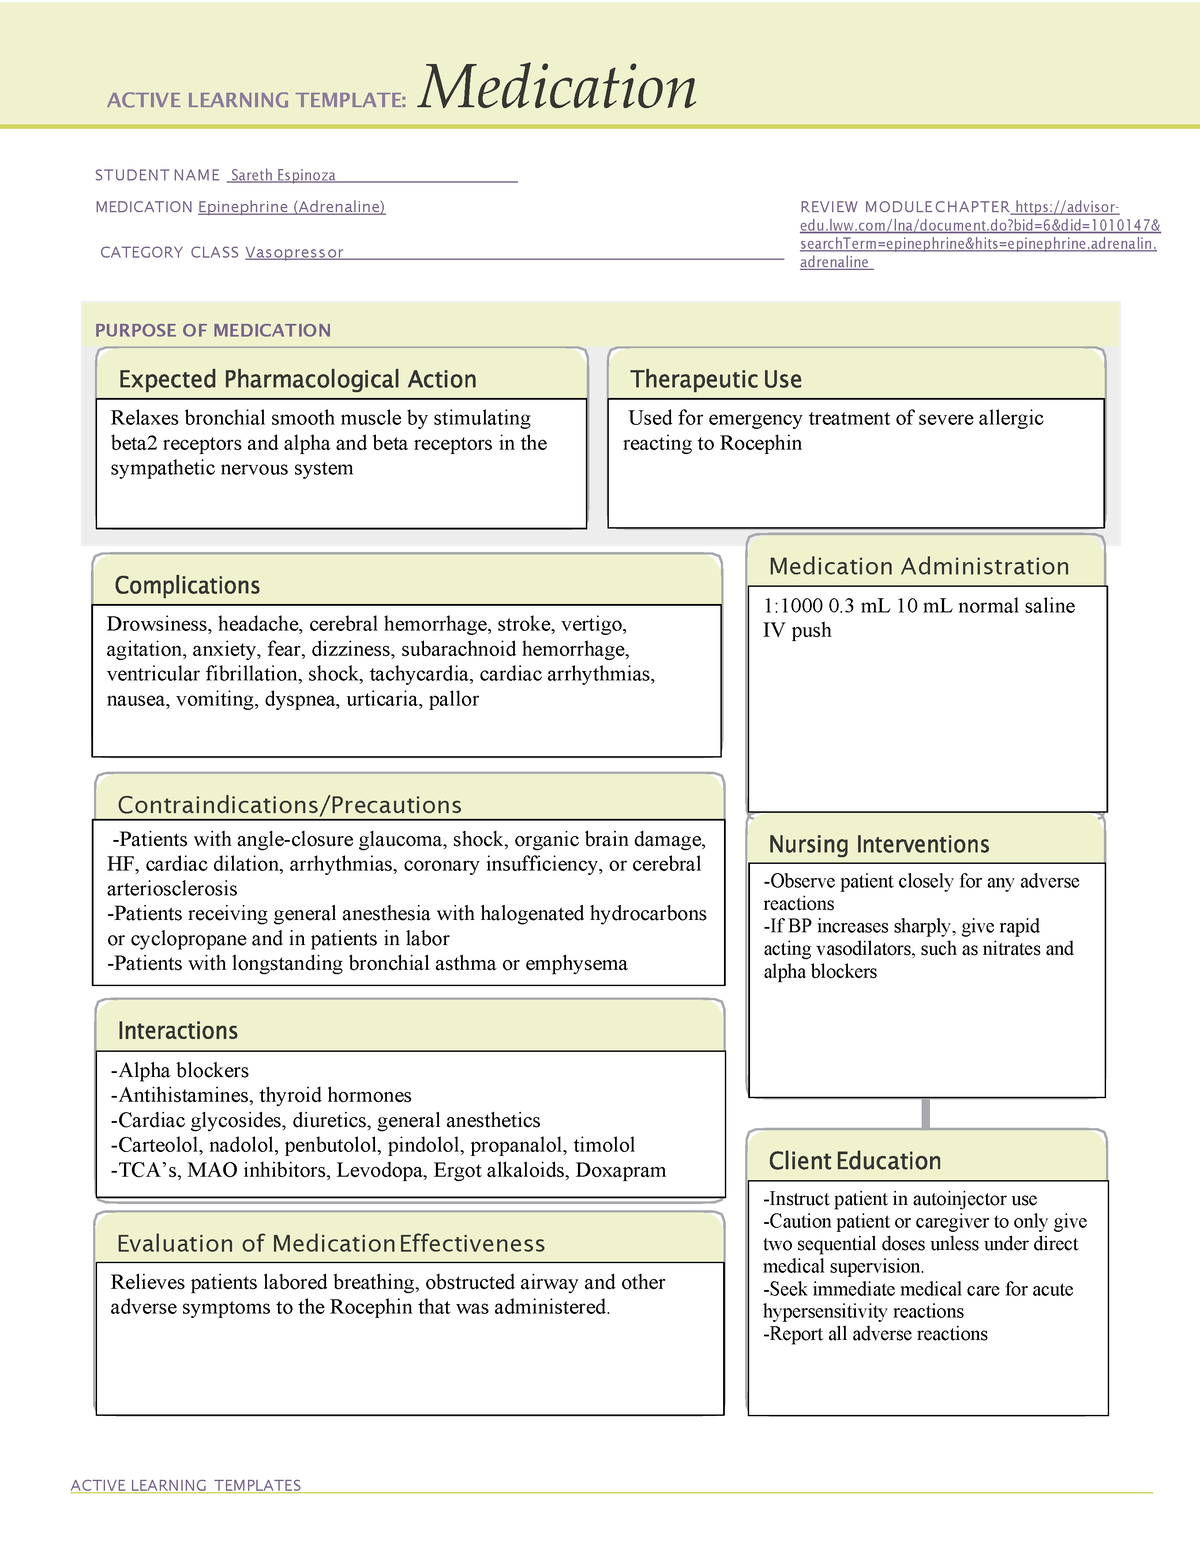 epinephrine-med-form-active-learning-template-medication-student